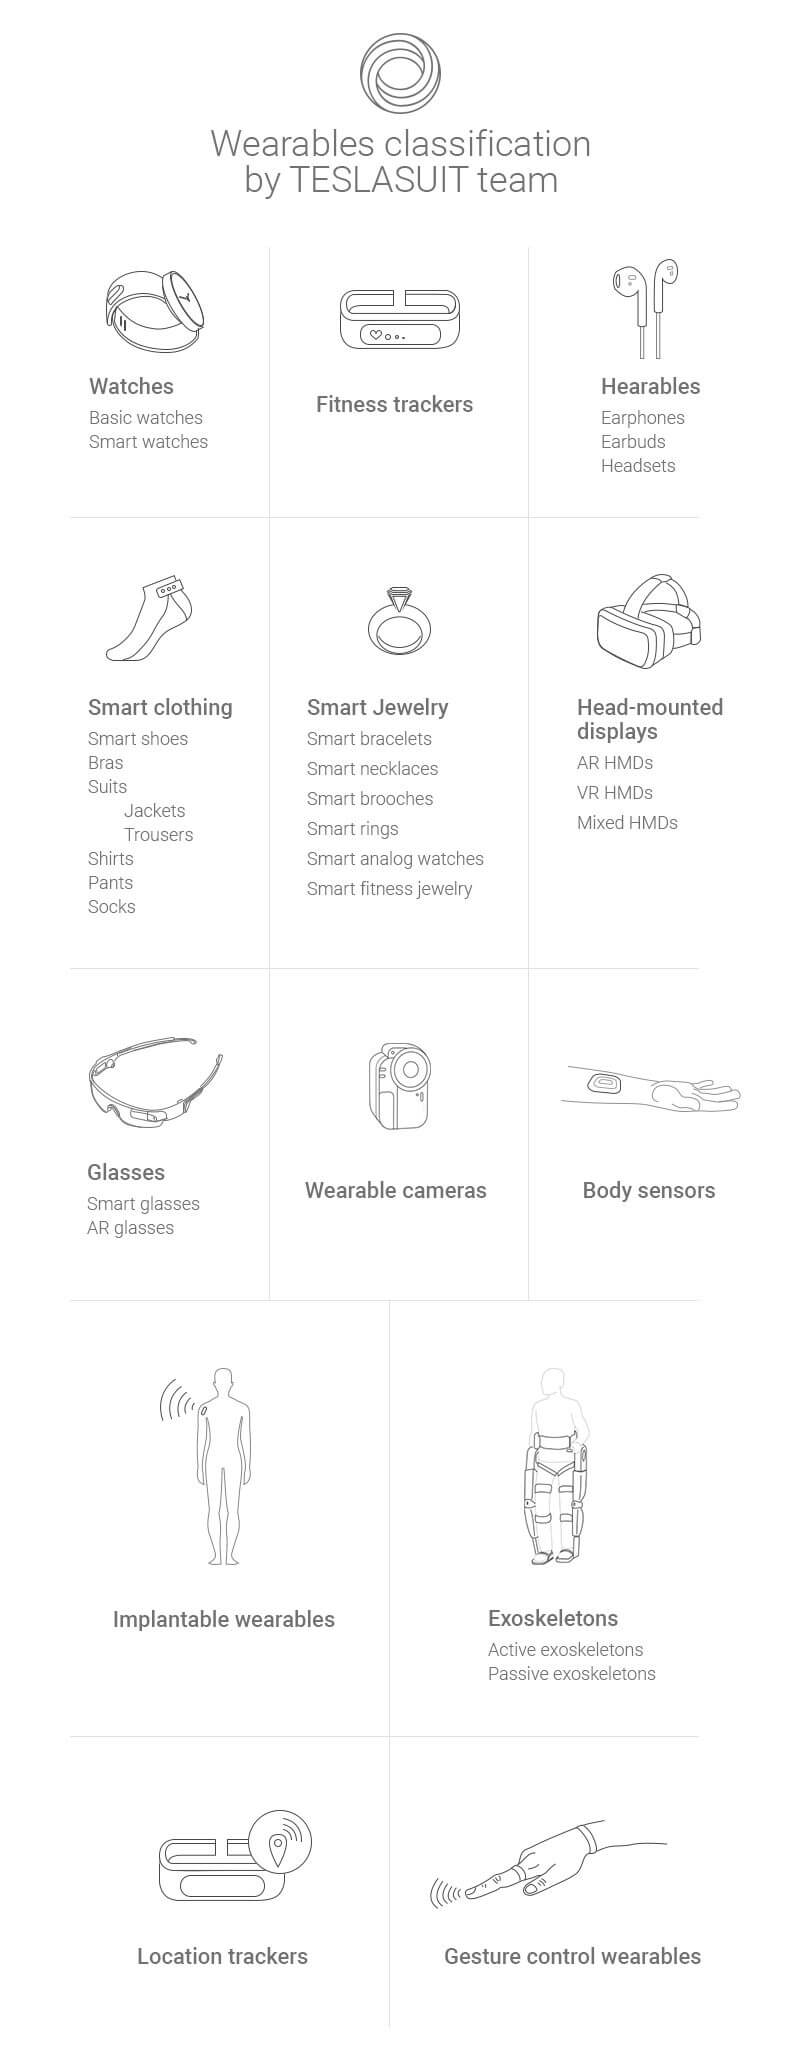 Wearables_classification_by_Teslasuit_team